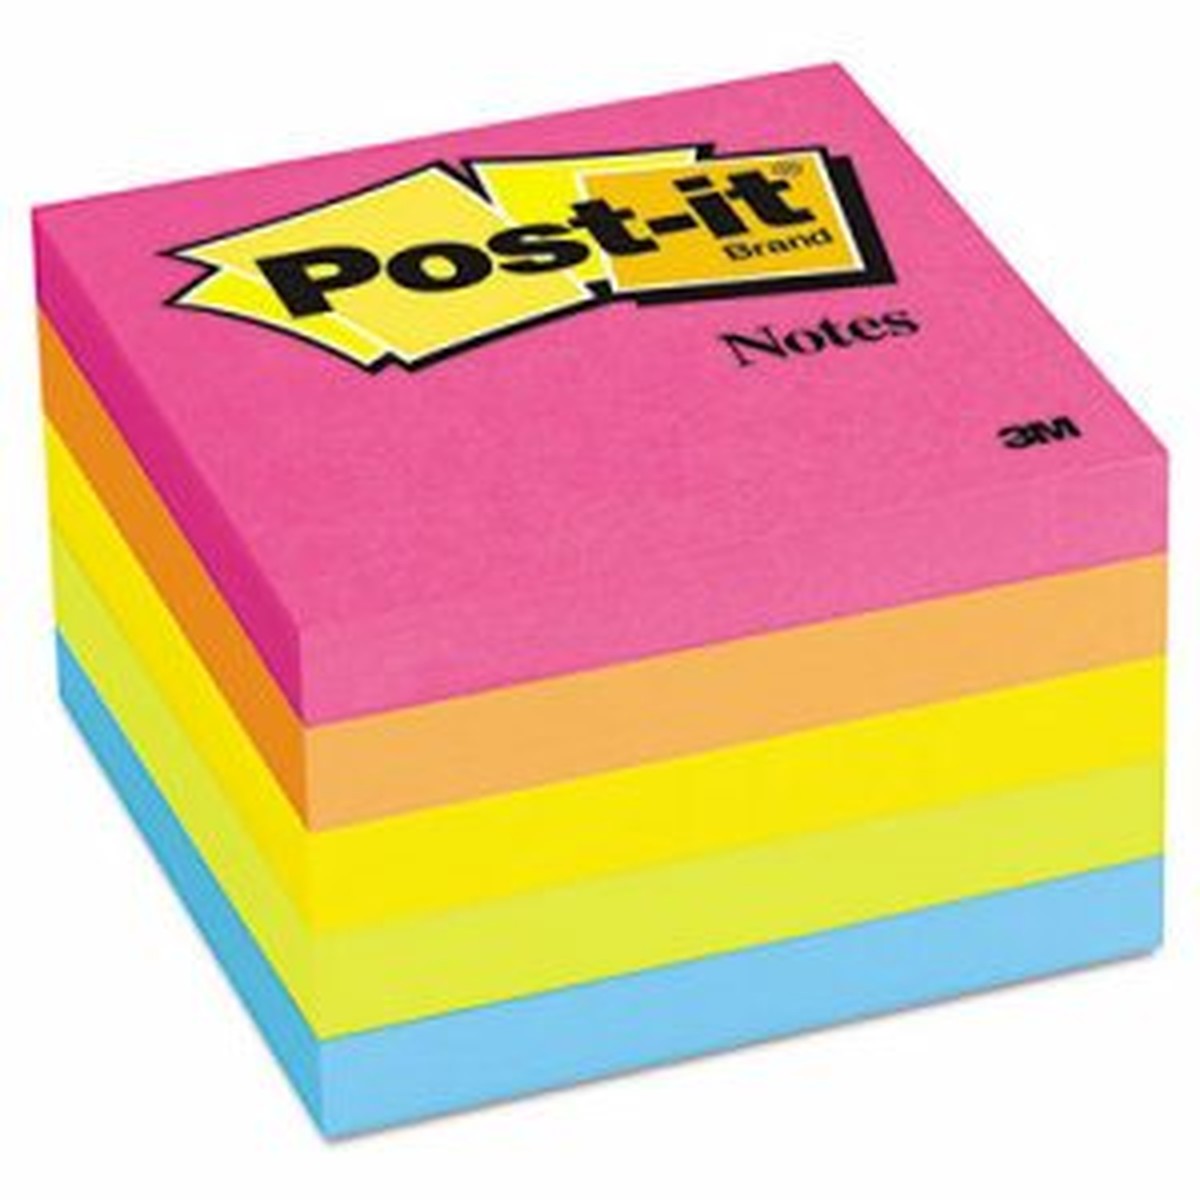 Original Pads in Cape Town Colors, 3 x 3, 100-Sheet, 5/Pack